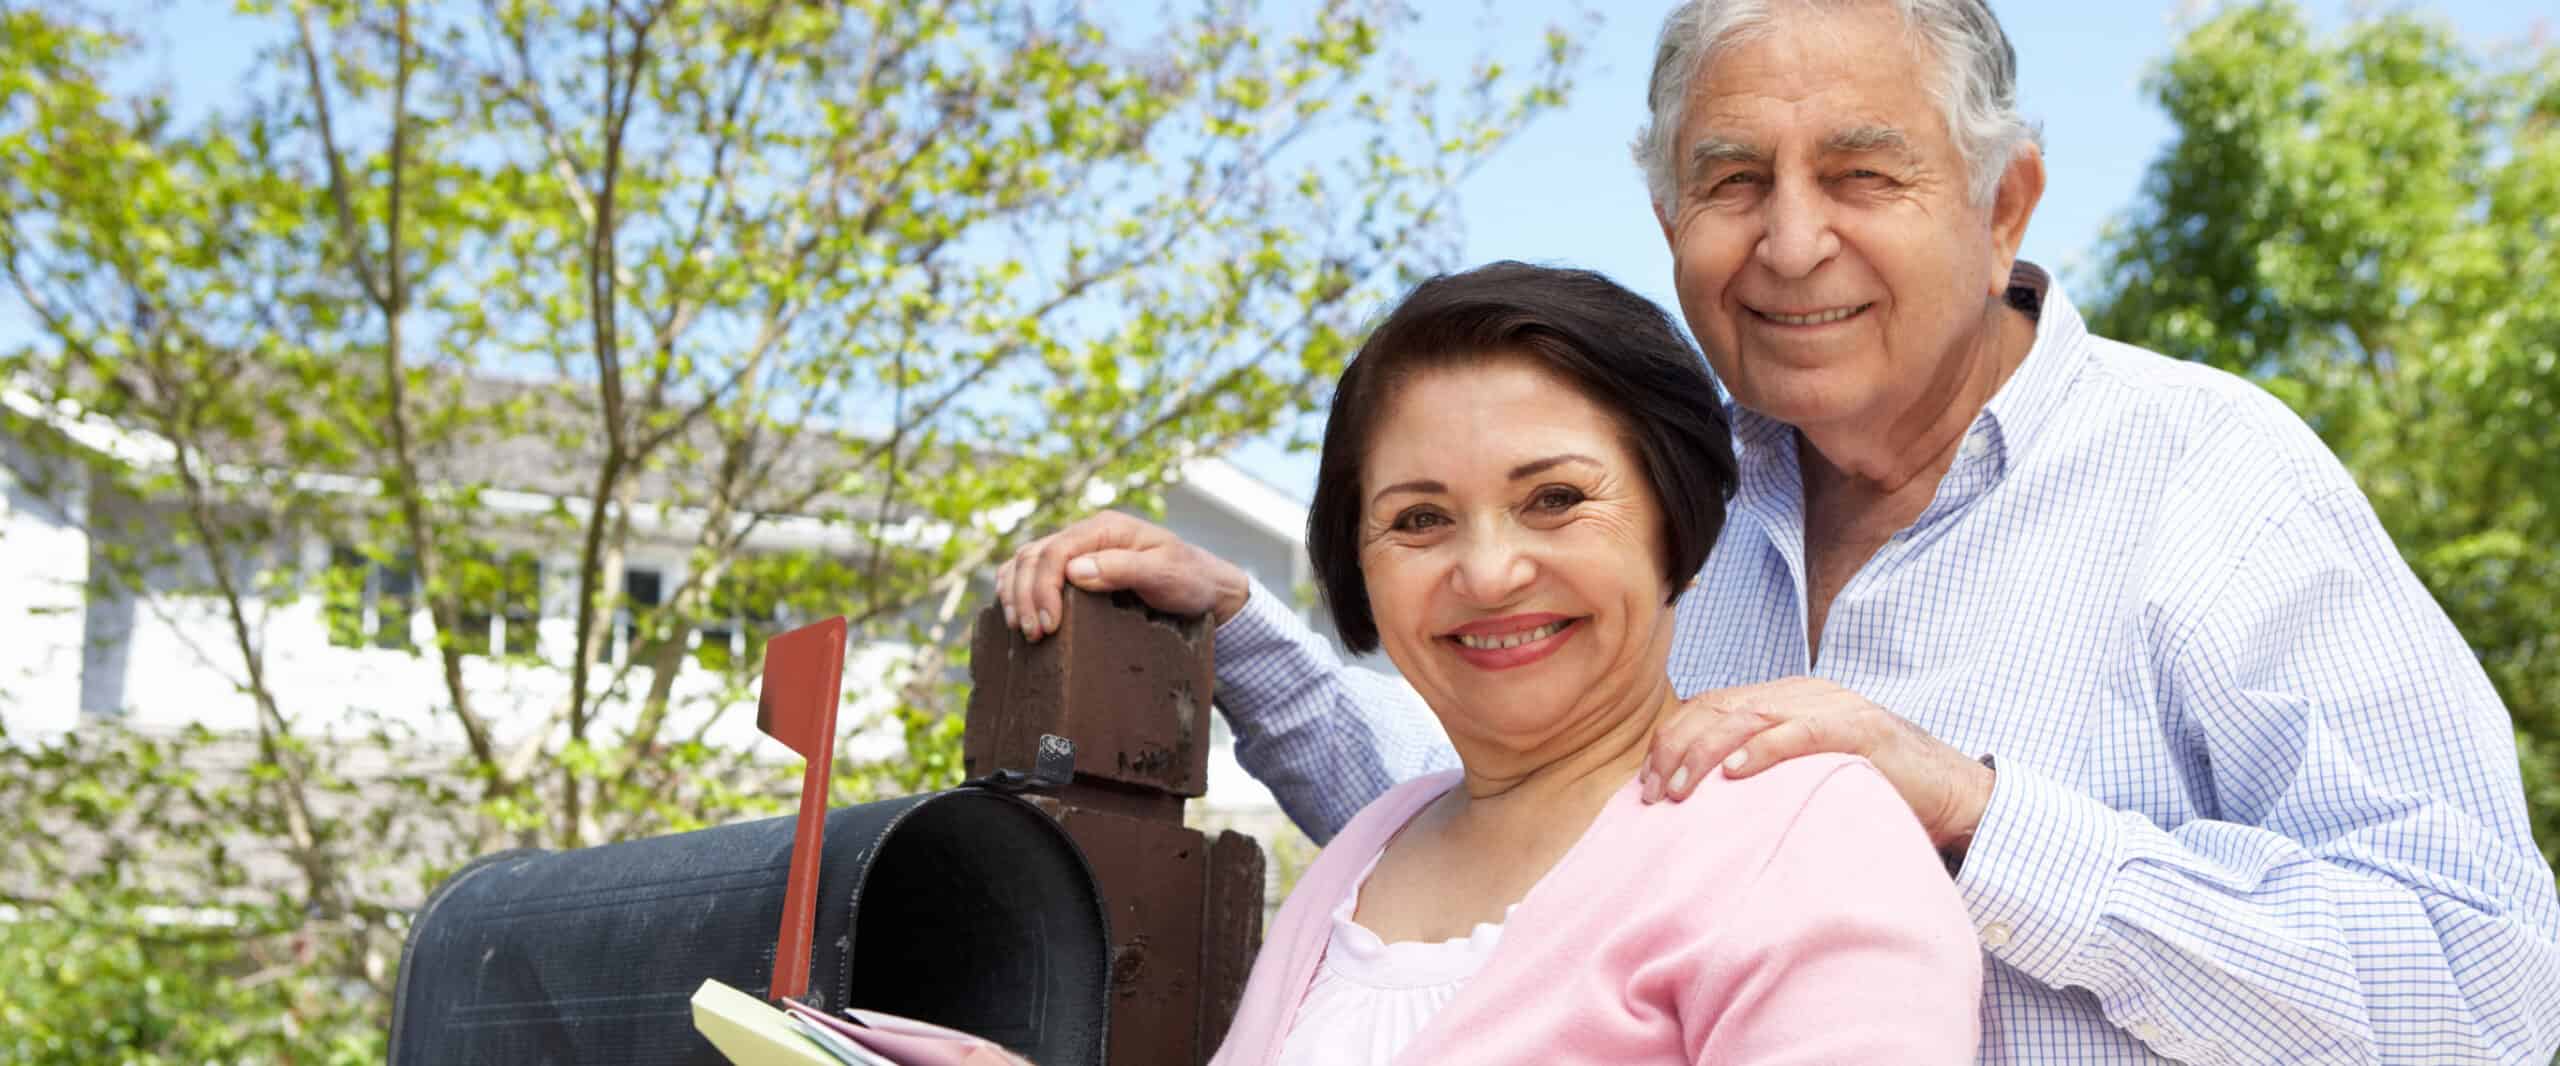 Smiling senior couple at their mailbox